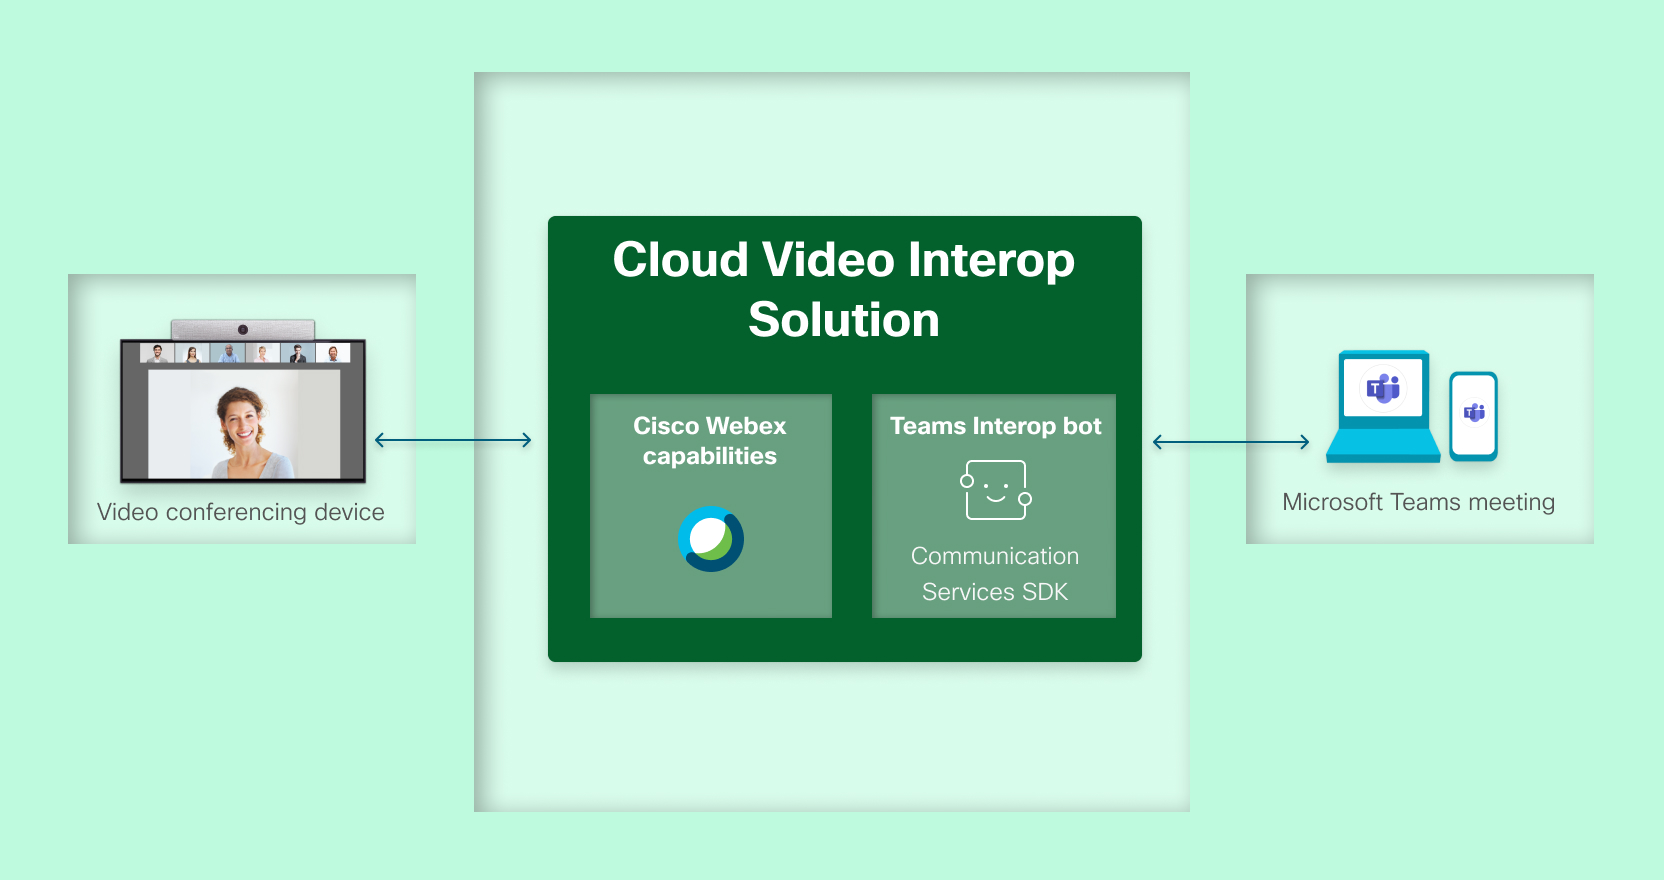 Зображення архітектури CVI на основі https://docs.microsoft.com/en-us/microsoftteams/cloud-video-interop